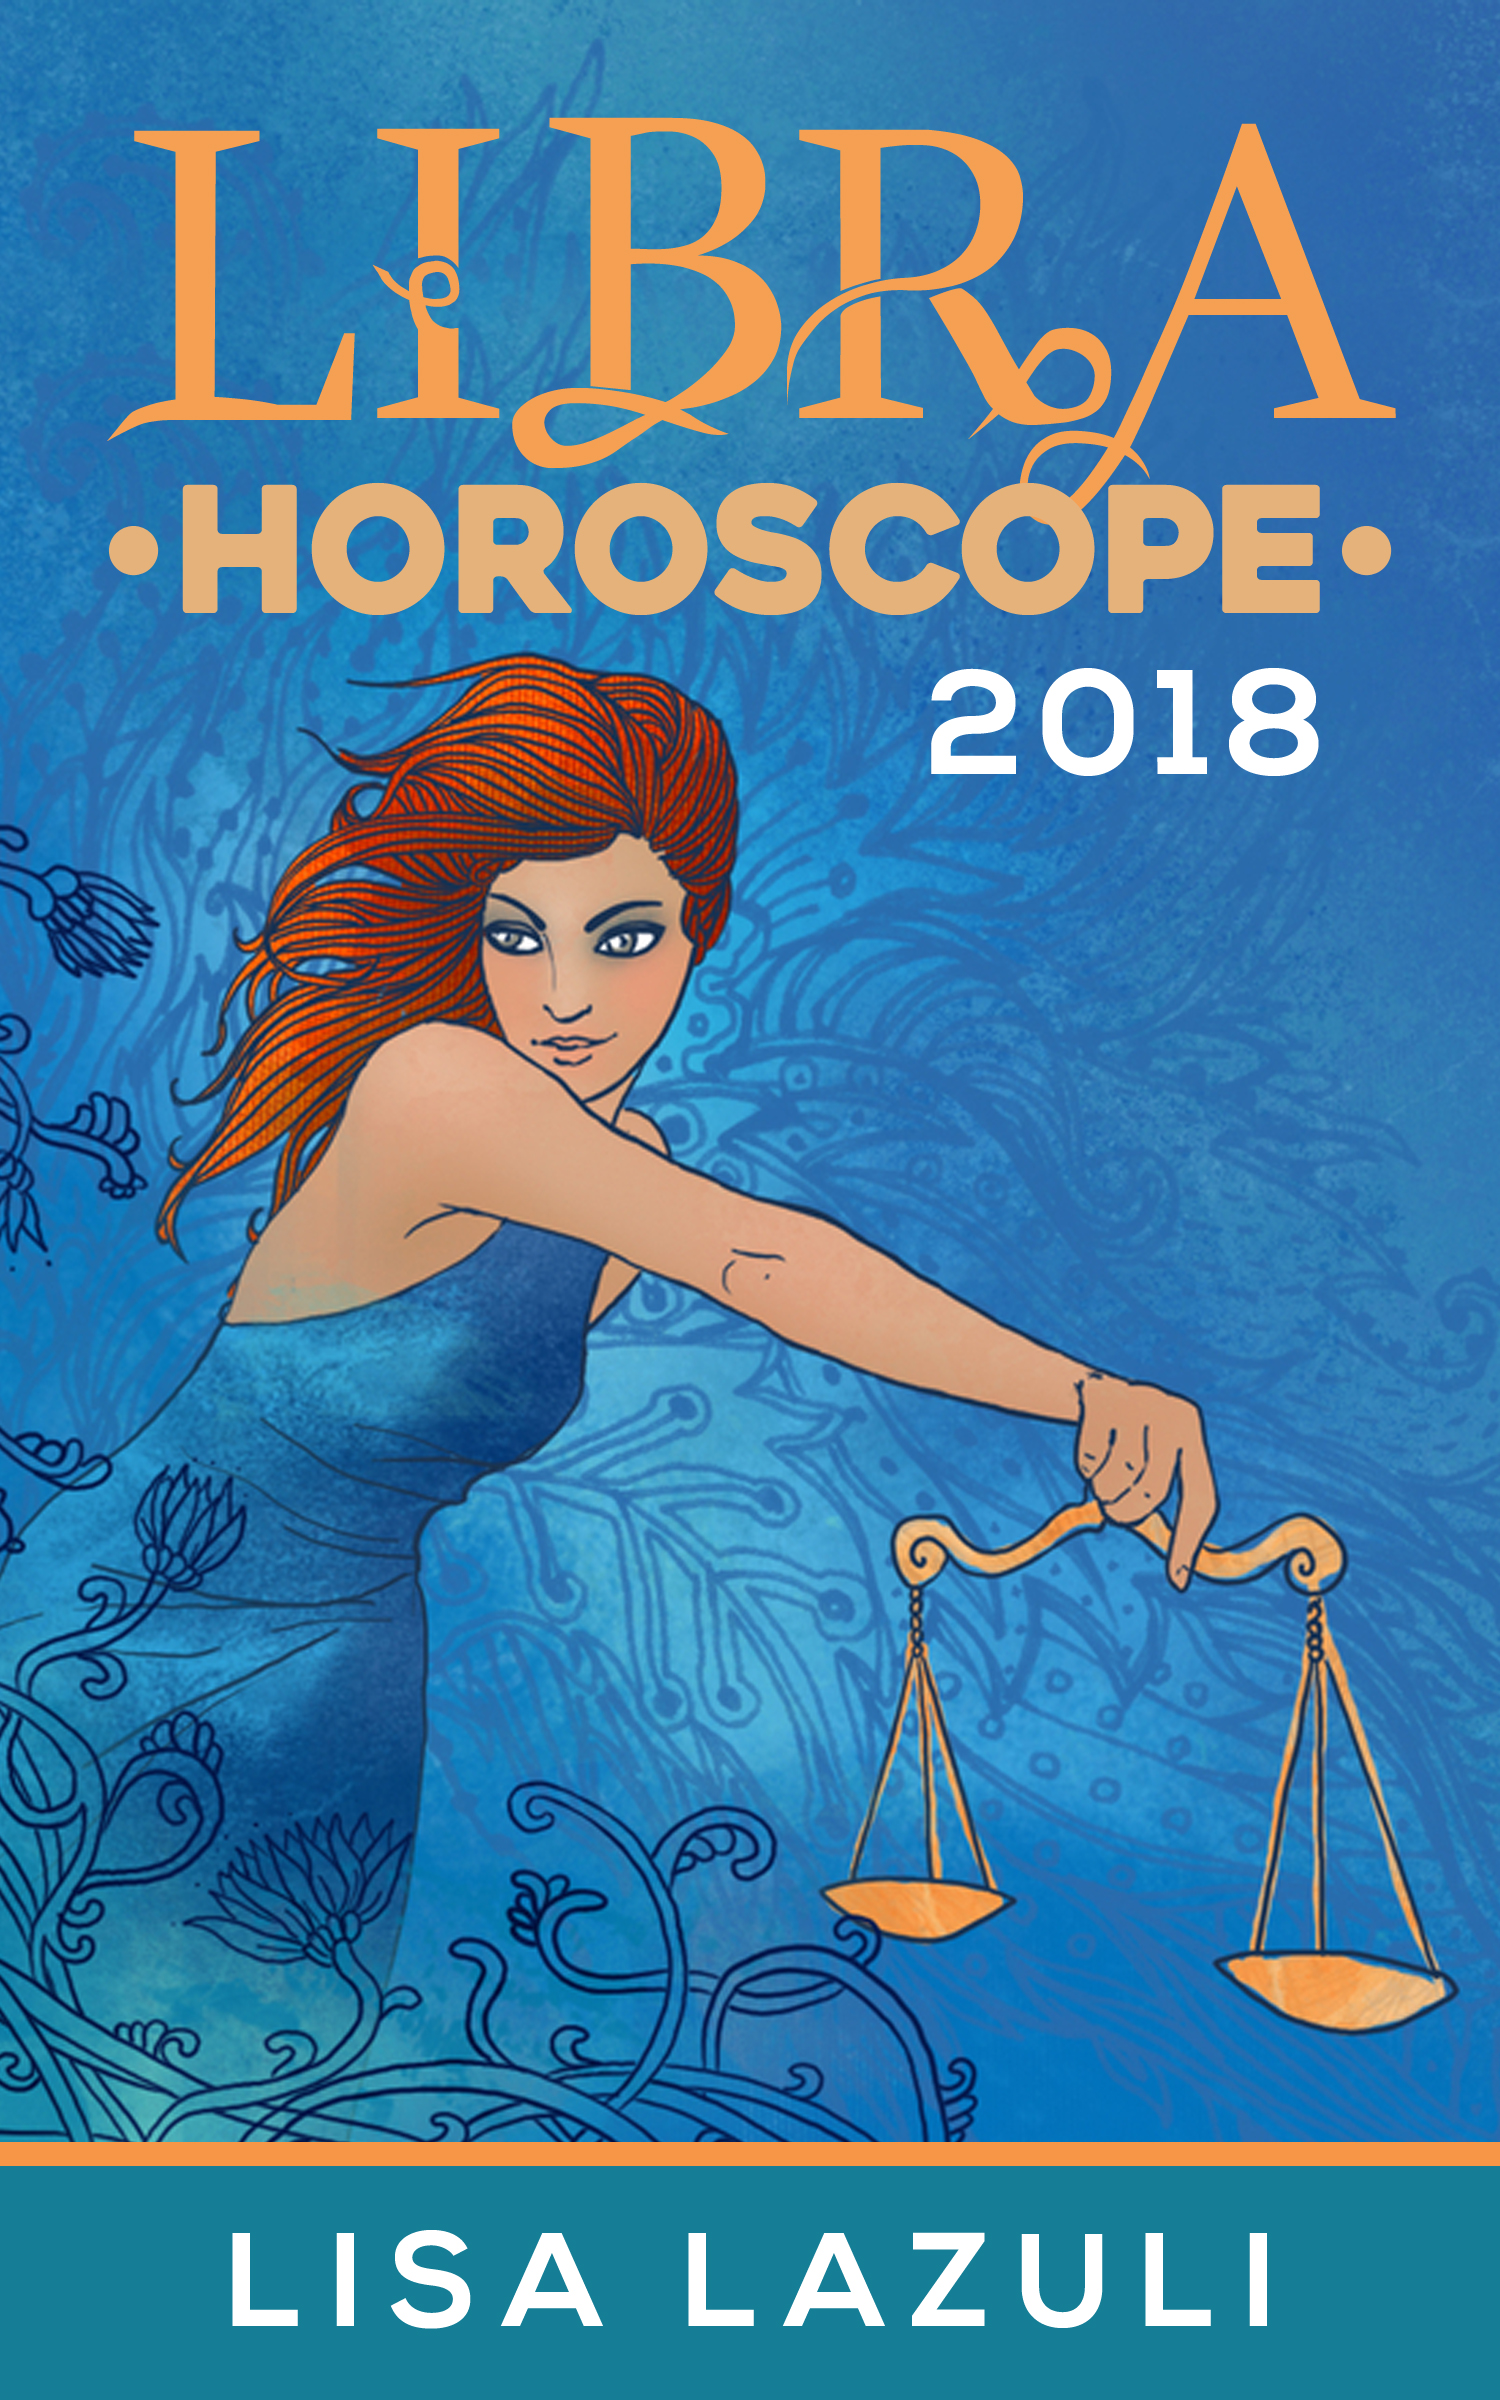 Libra_Horoscope_2018